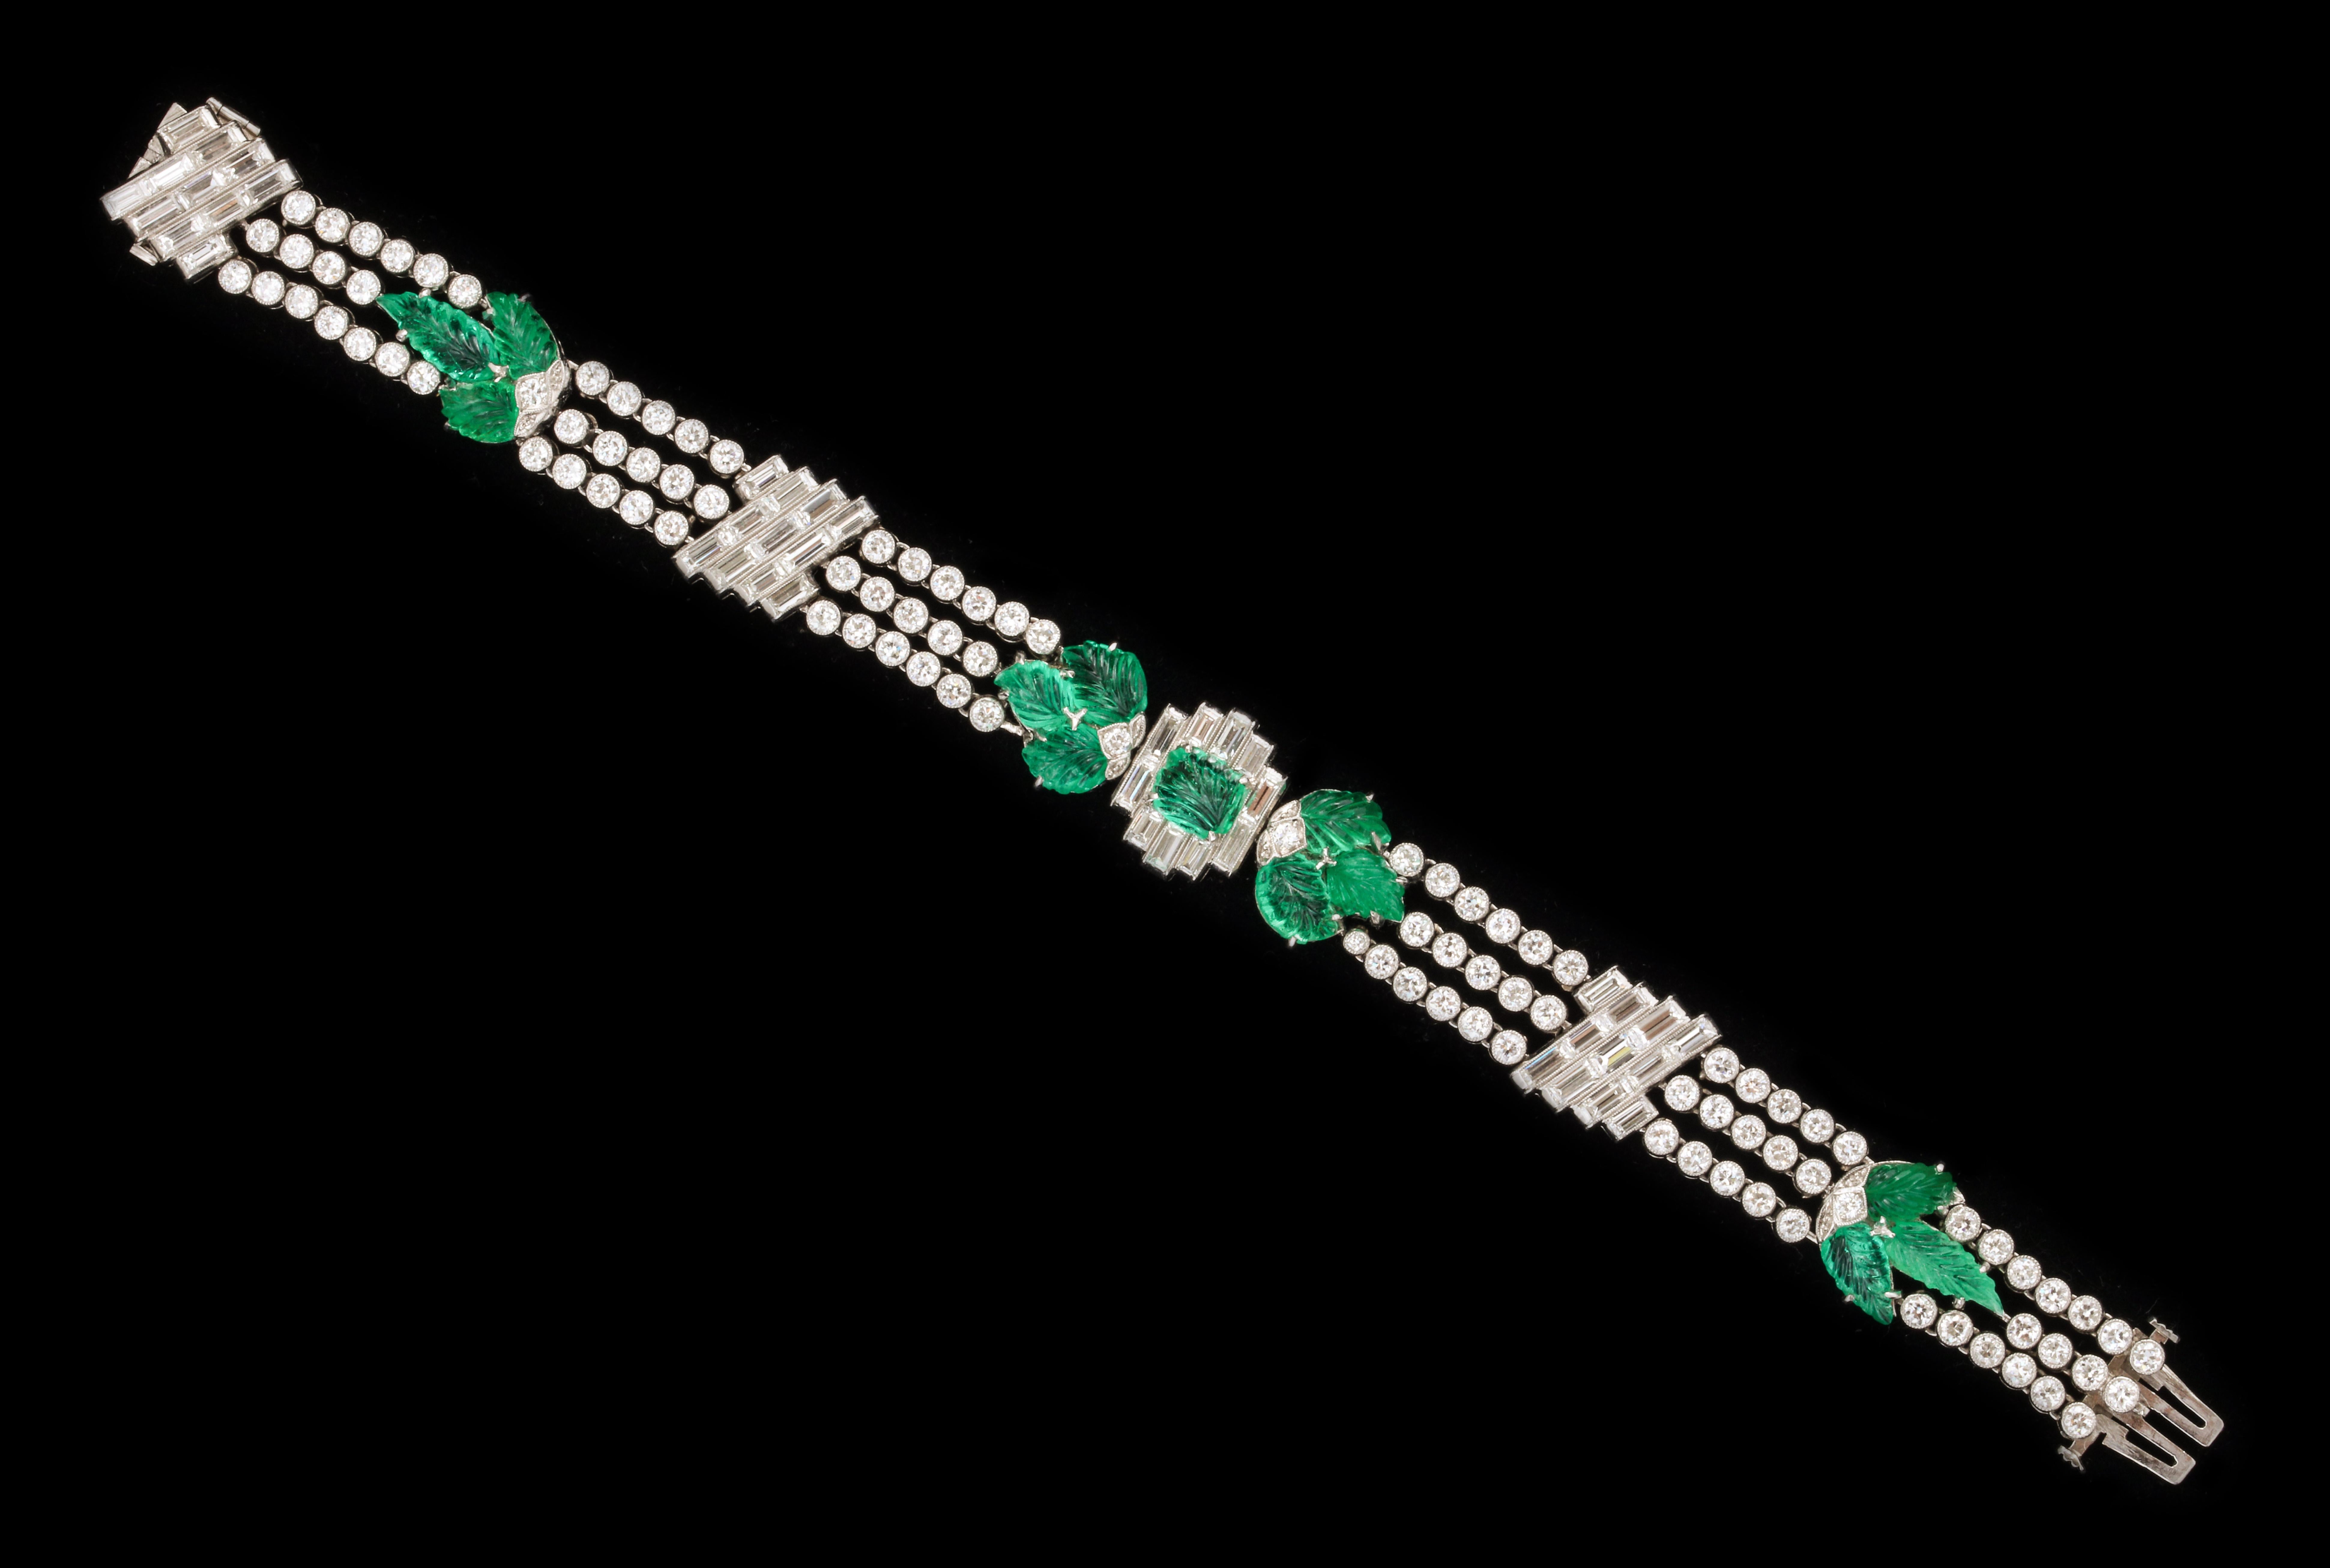 Women's or Men's Matilda Dodge Wilson's Art Deco Carved emerald bracelet